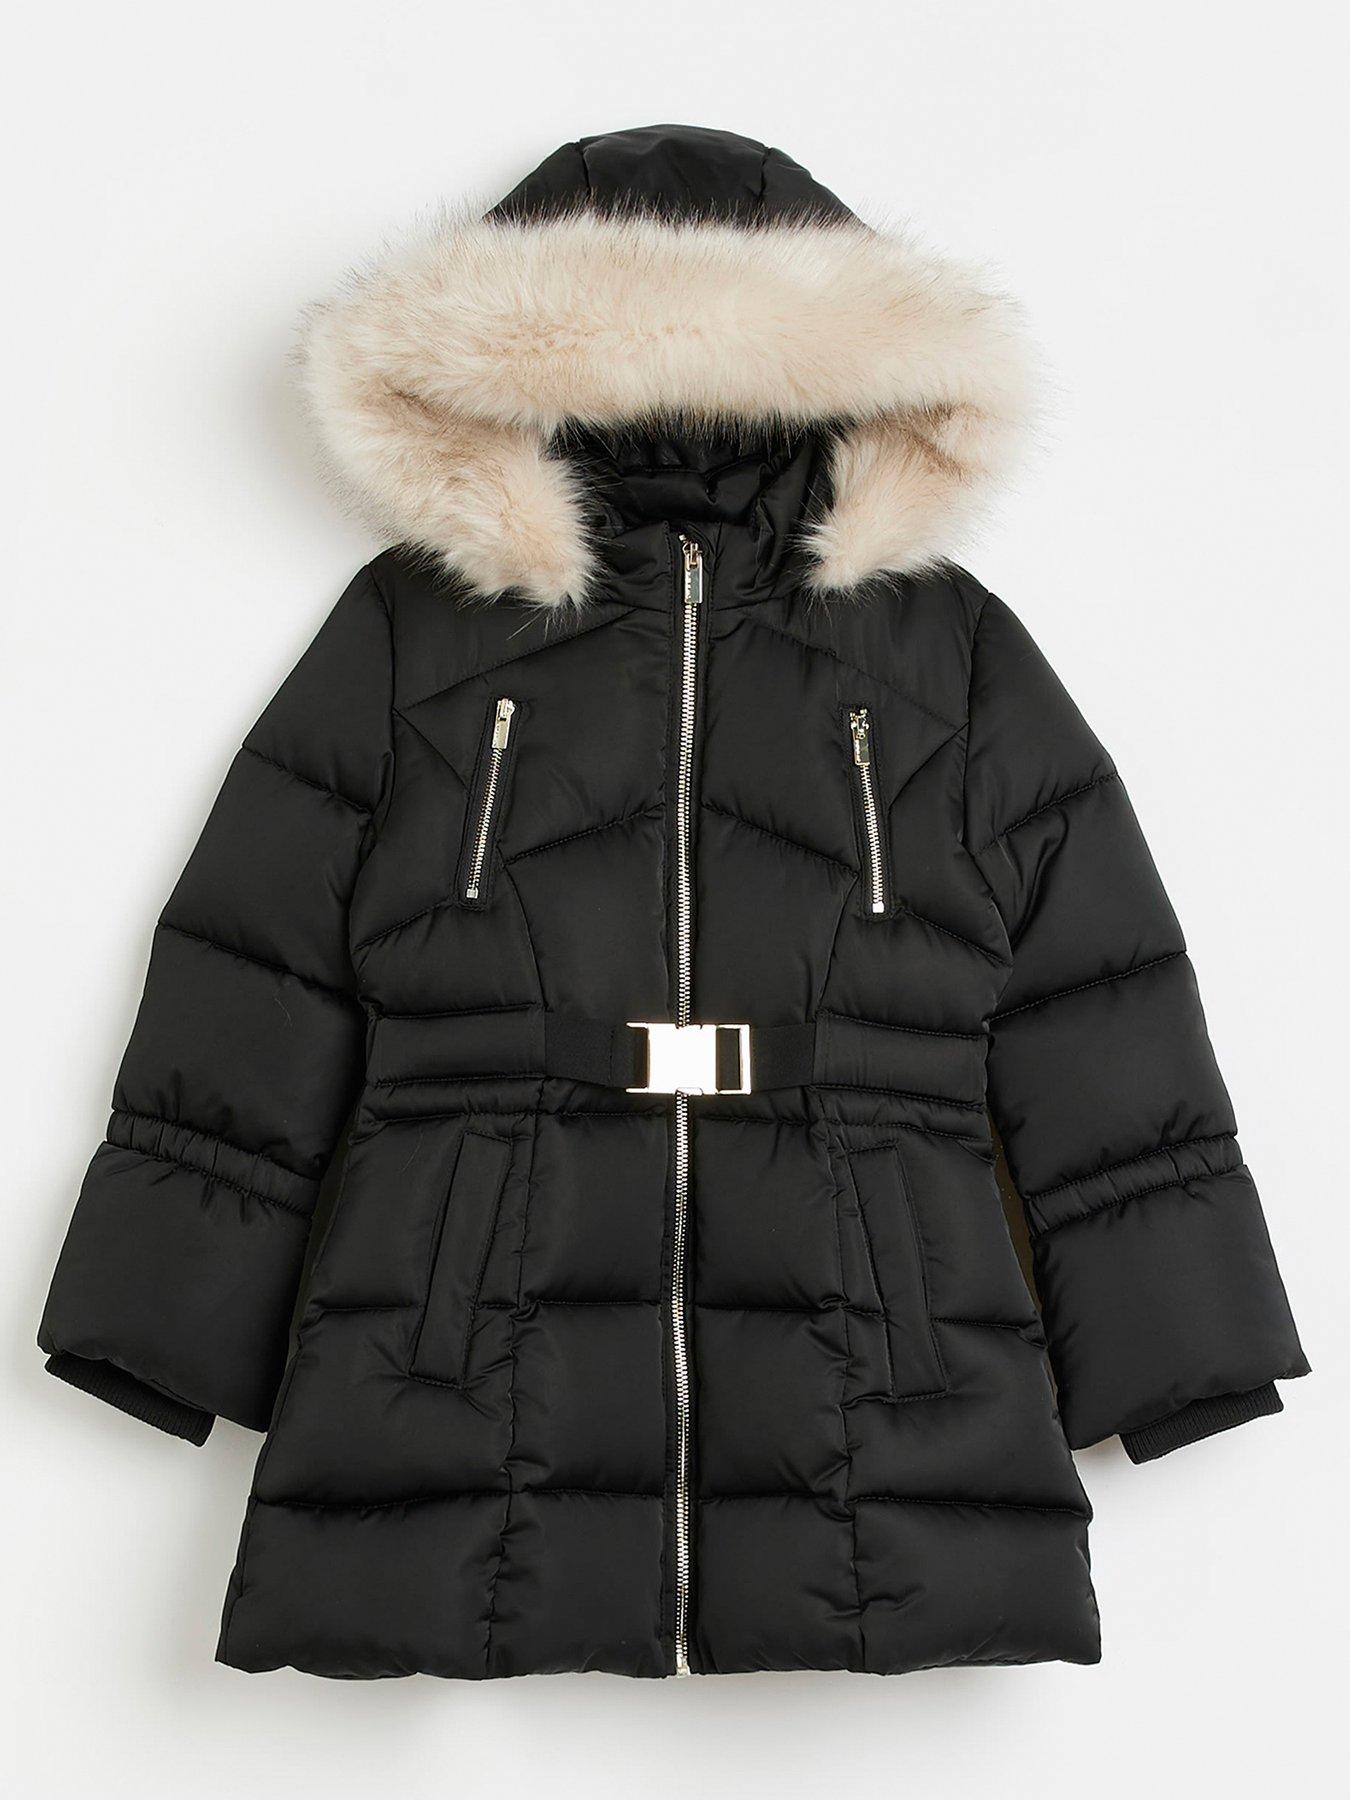 Street Essentials Girls Black Detachable Hood School Coat Smart Anorak Parka Jacket Sizes from 7 to 13 Years 